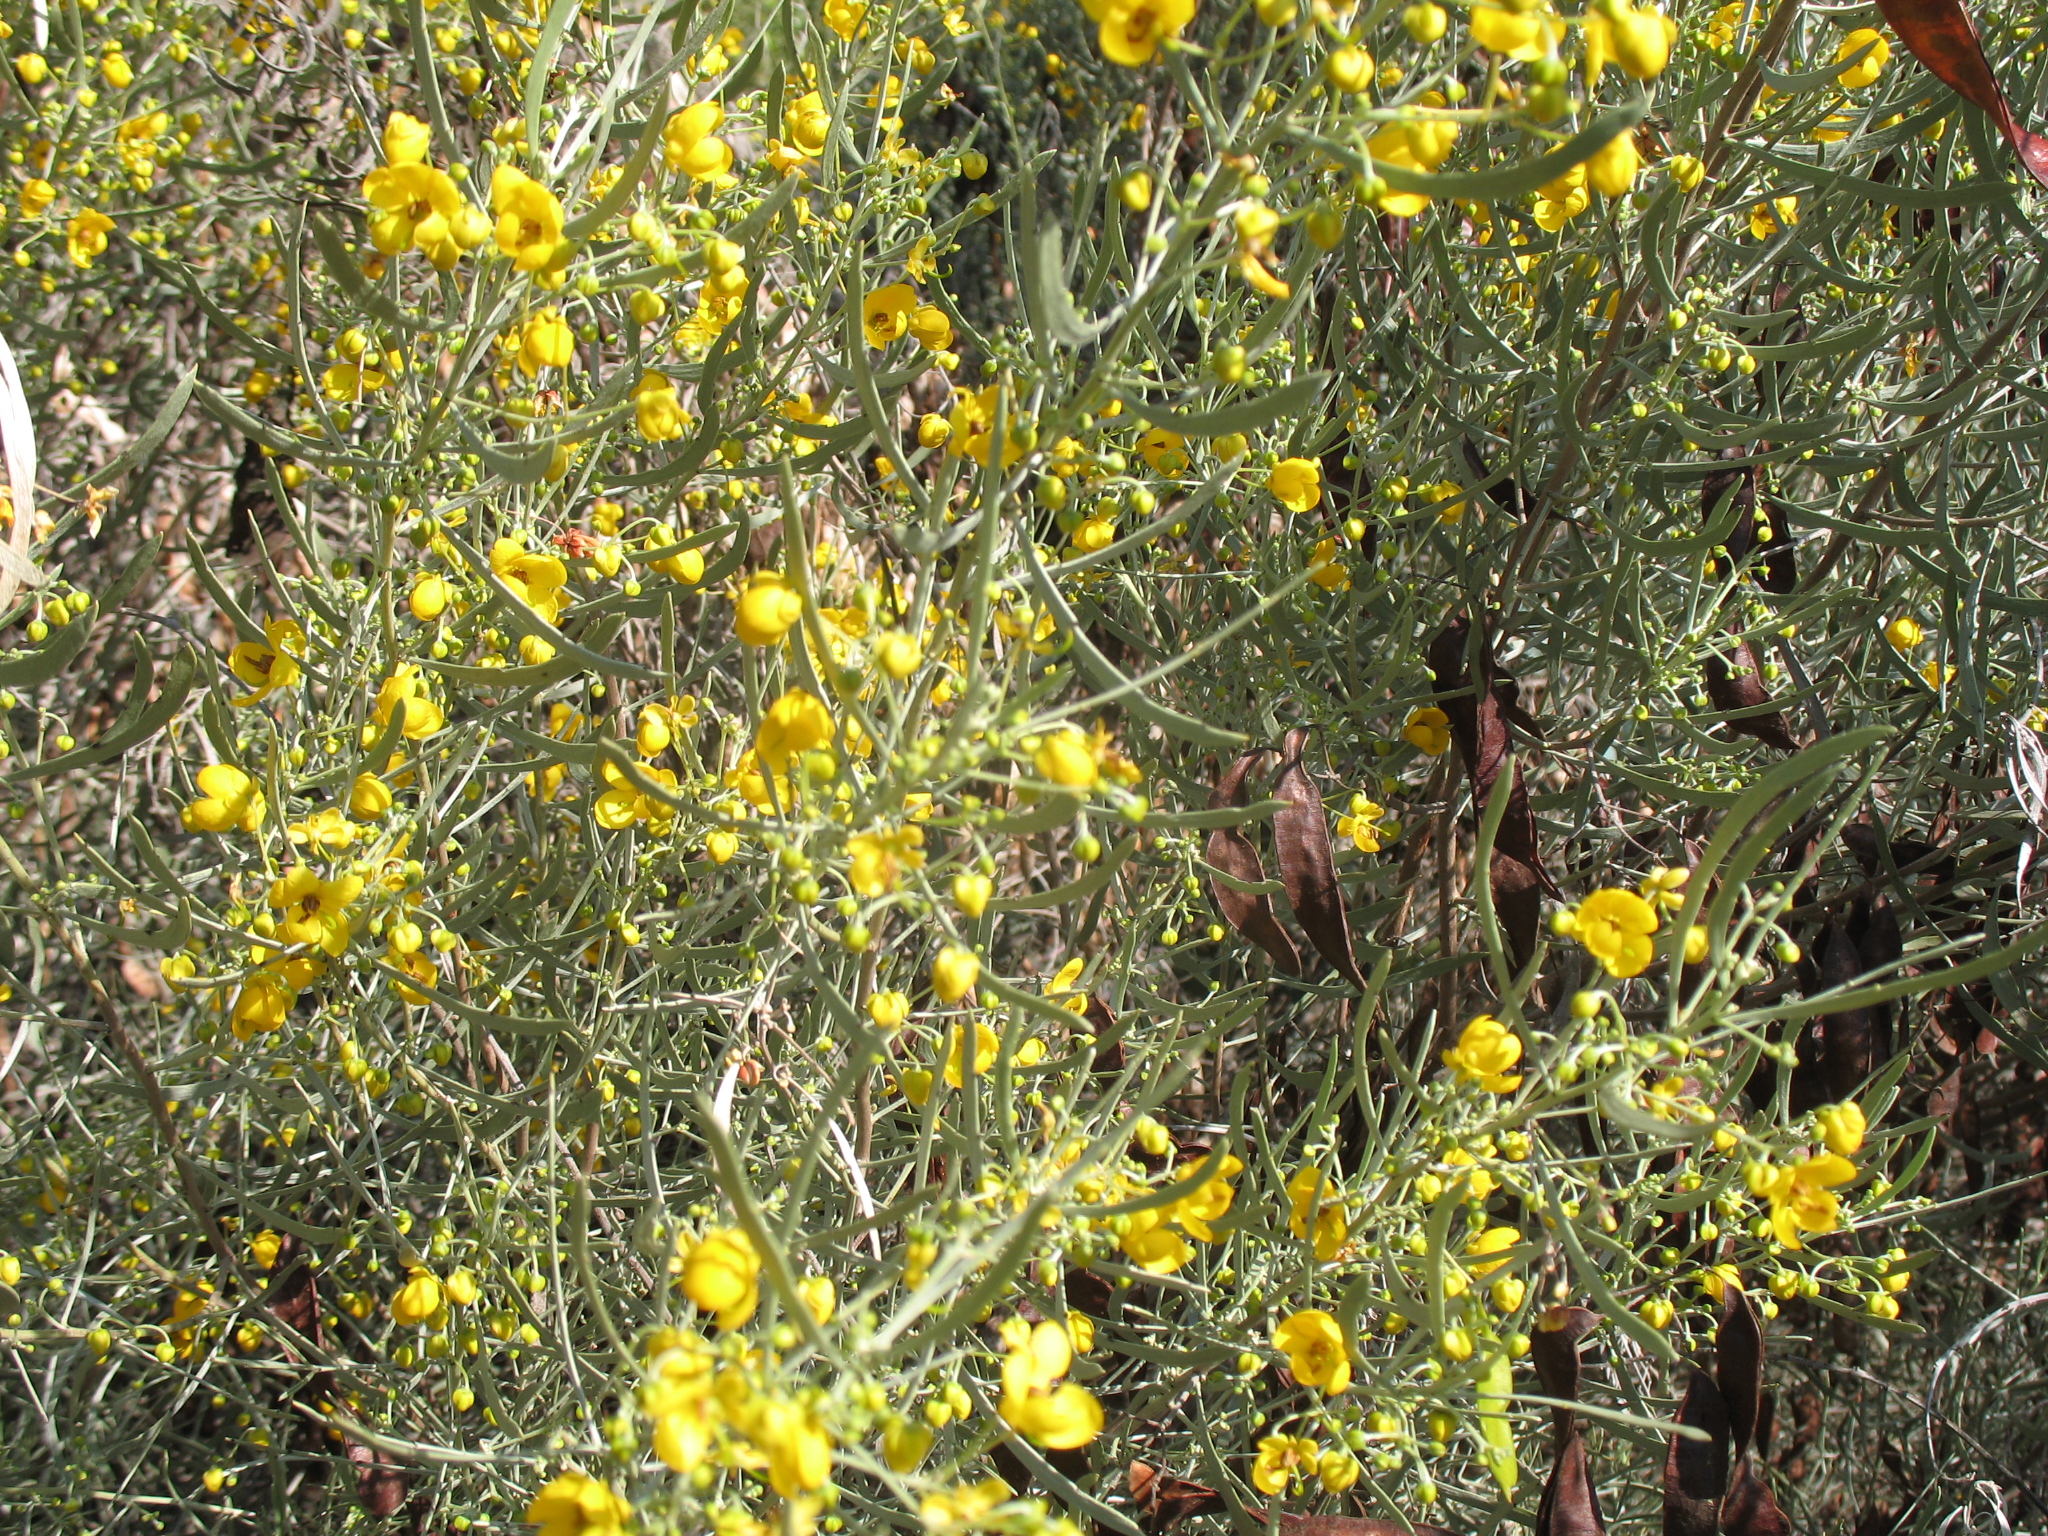 Senna artemisioides subsp. petiolaris / Senna artemisioides subsp. petiolaris